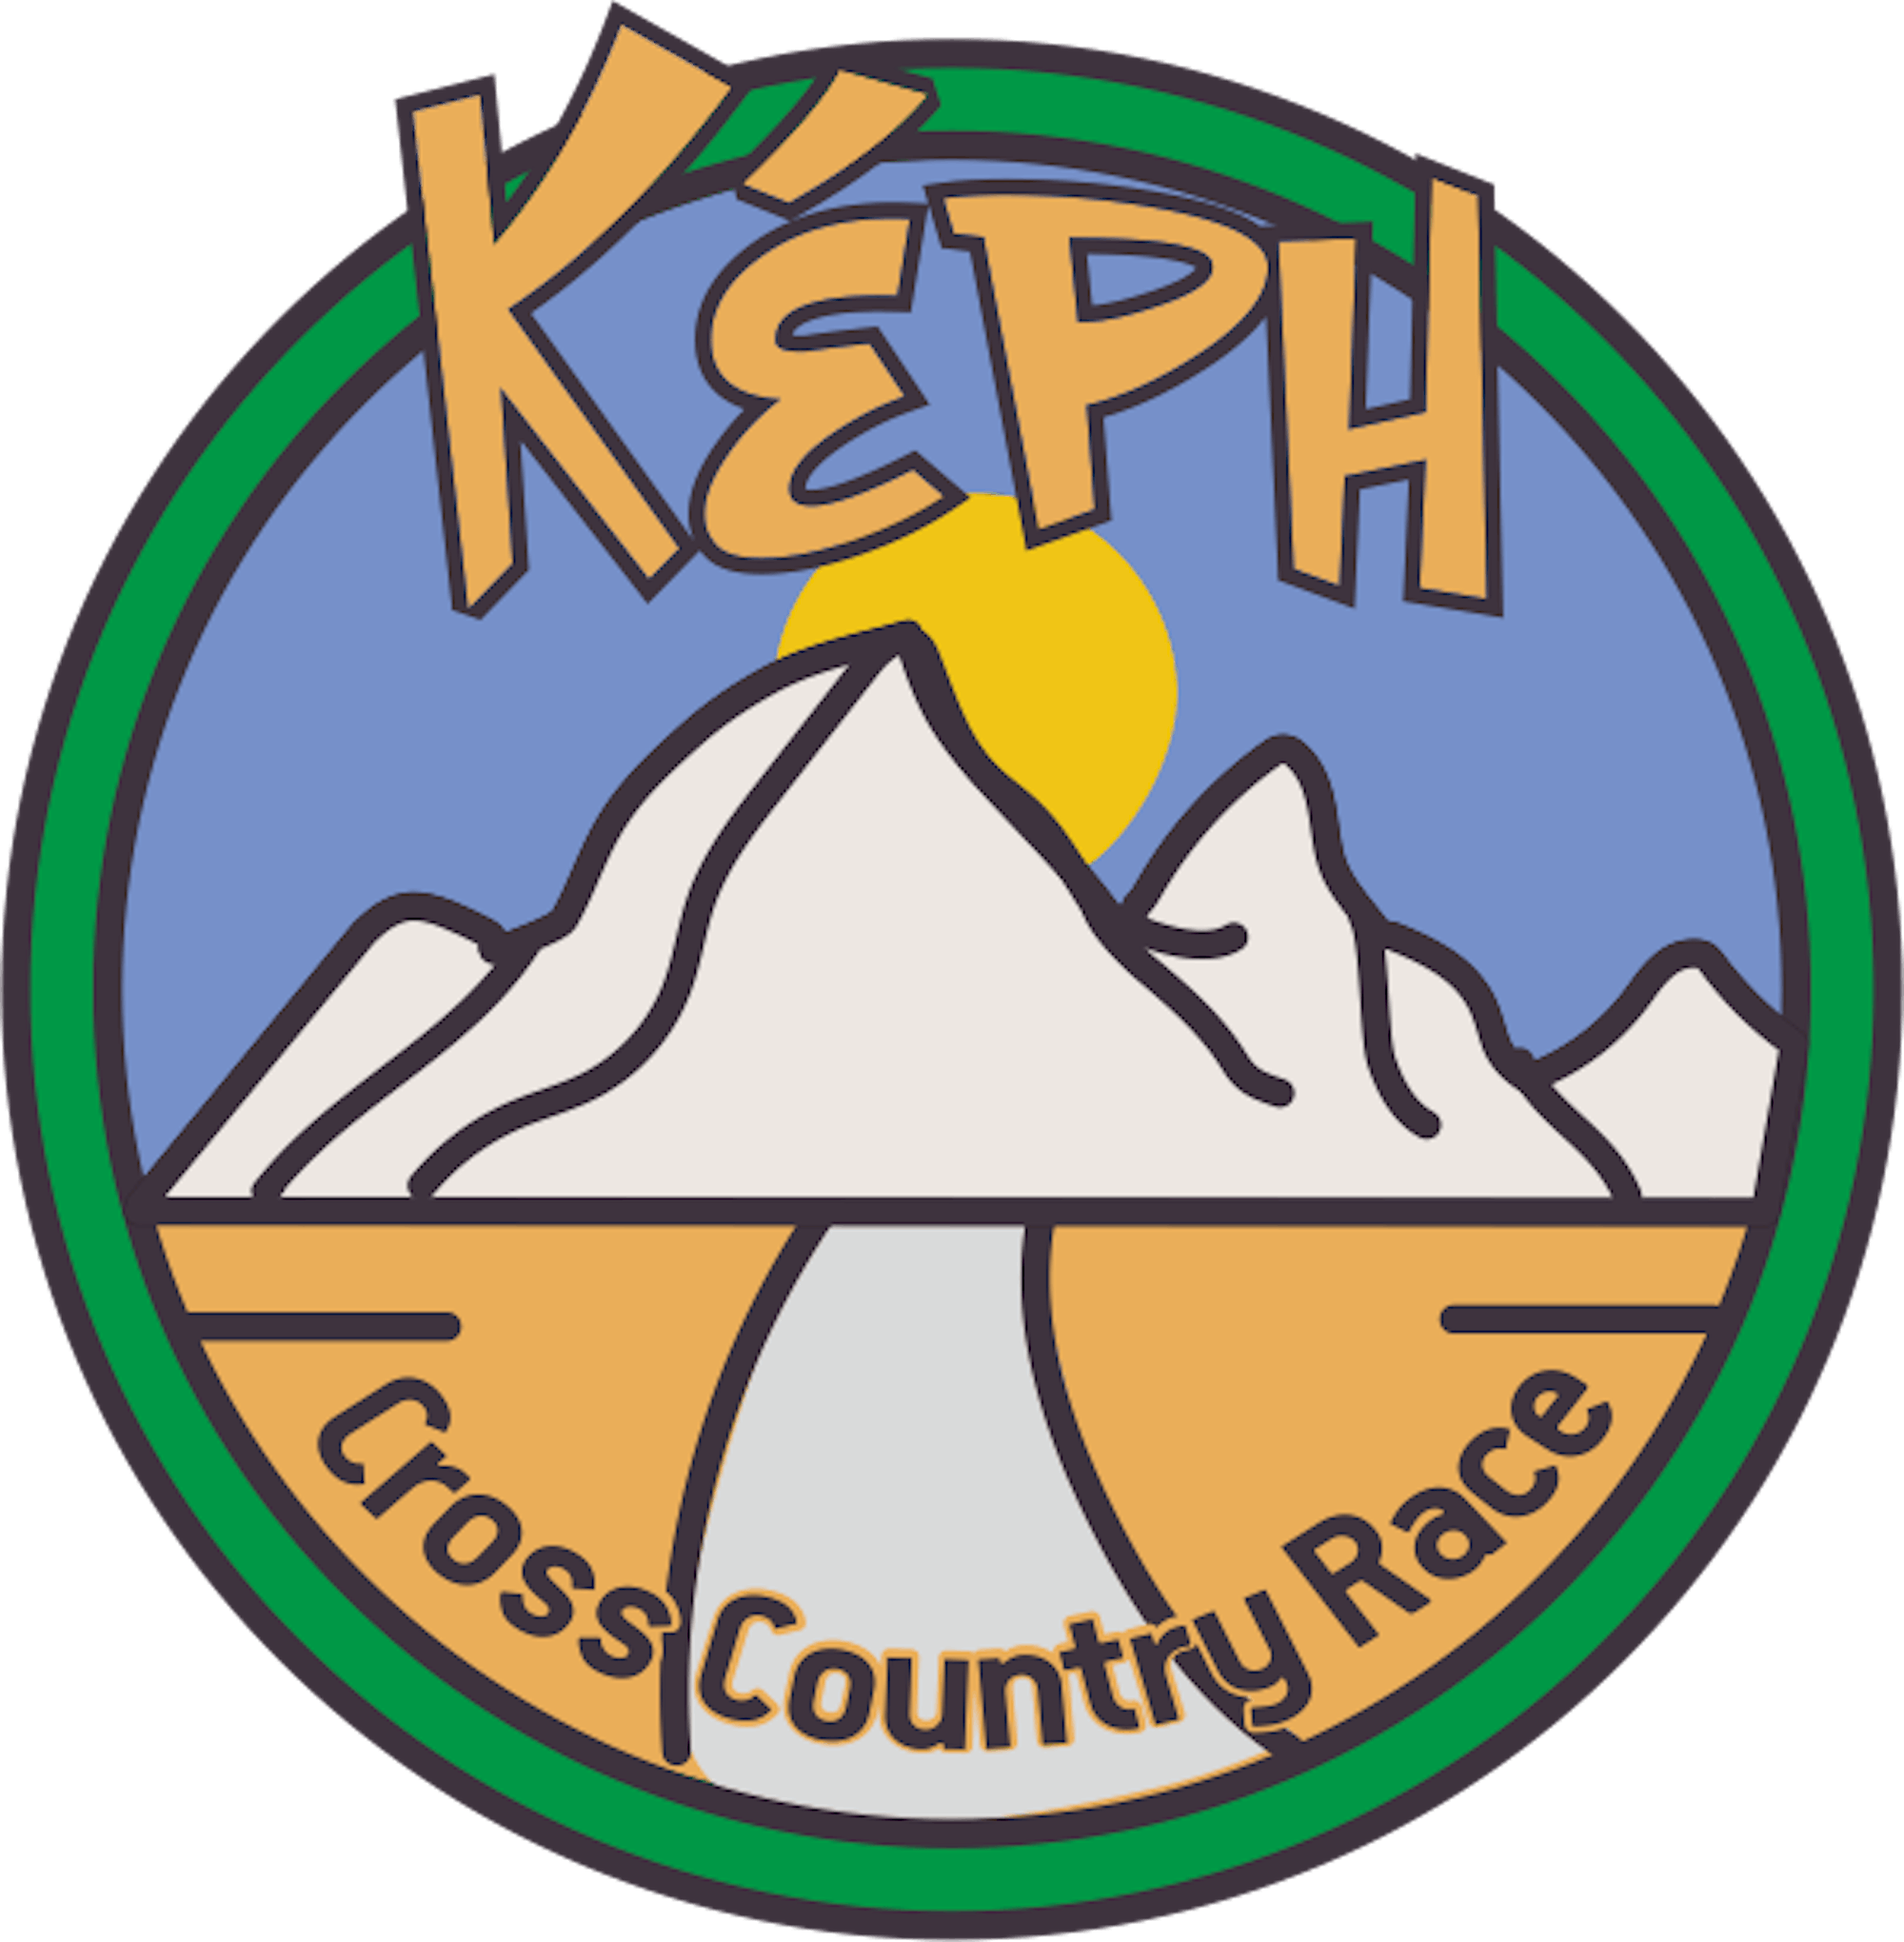 Keri Cross Country Race